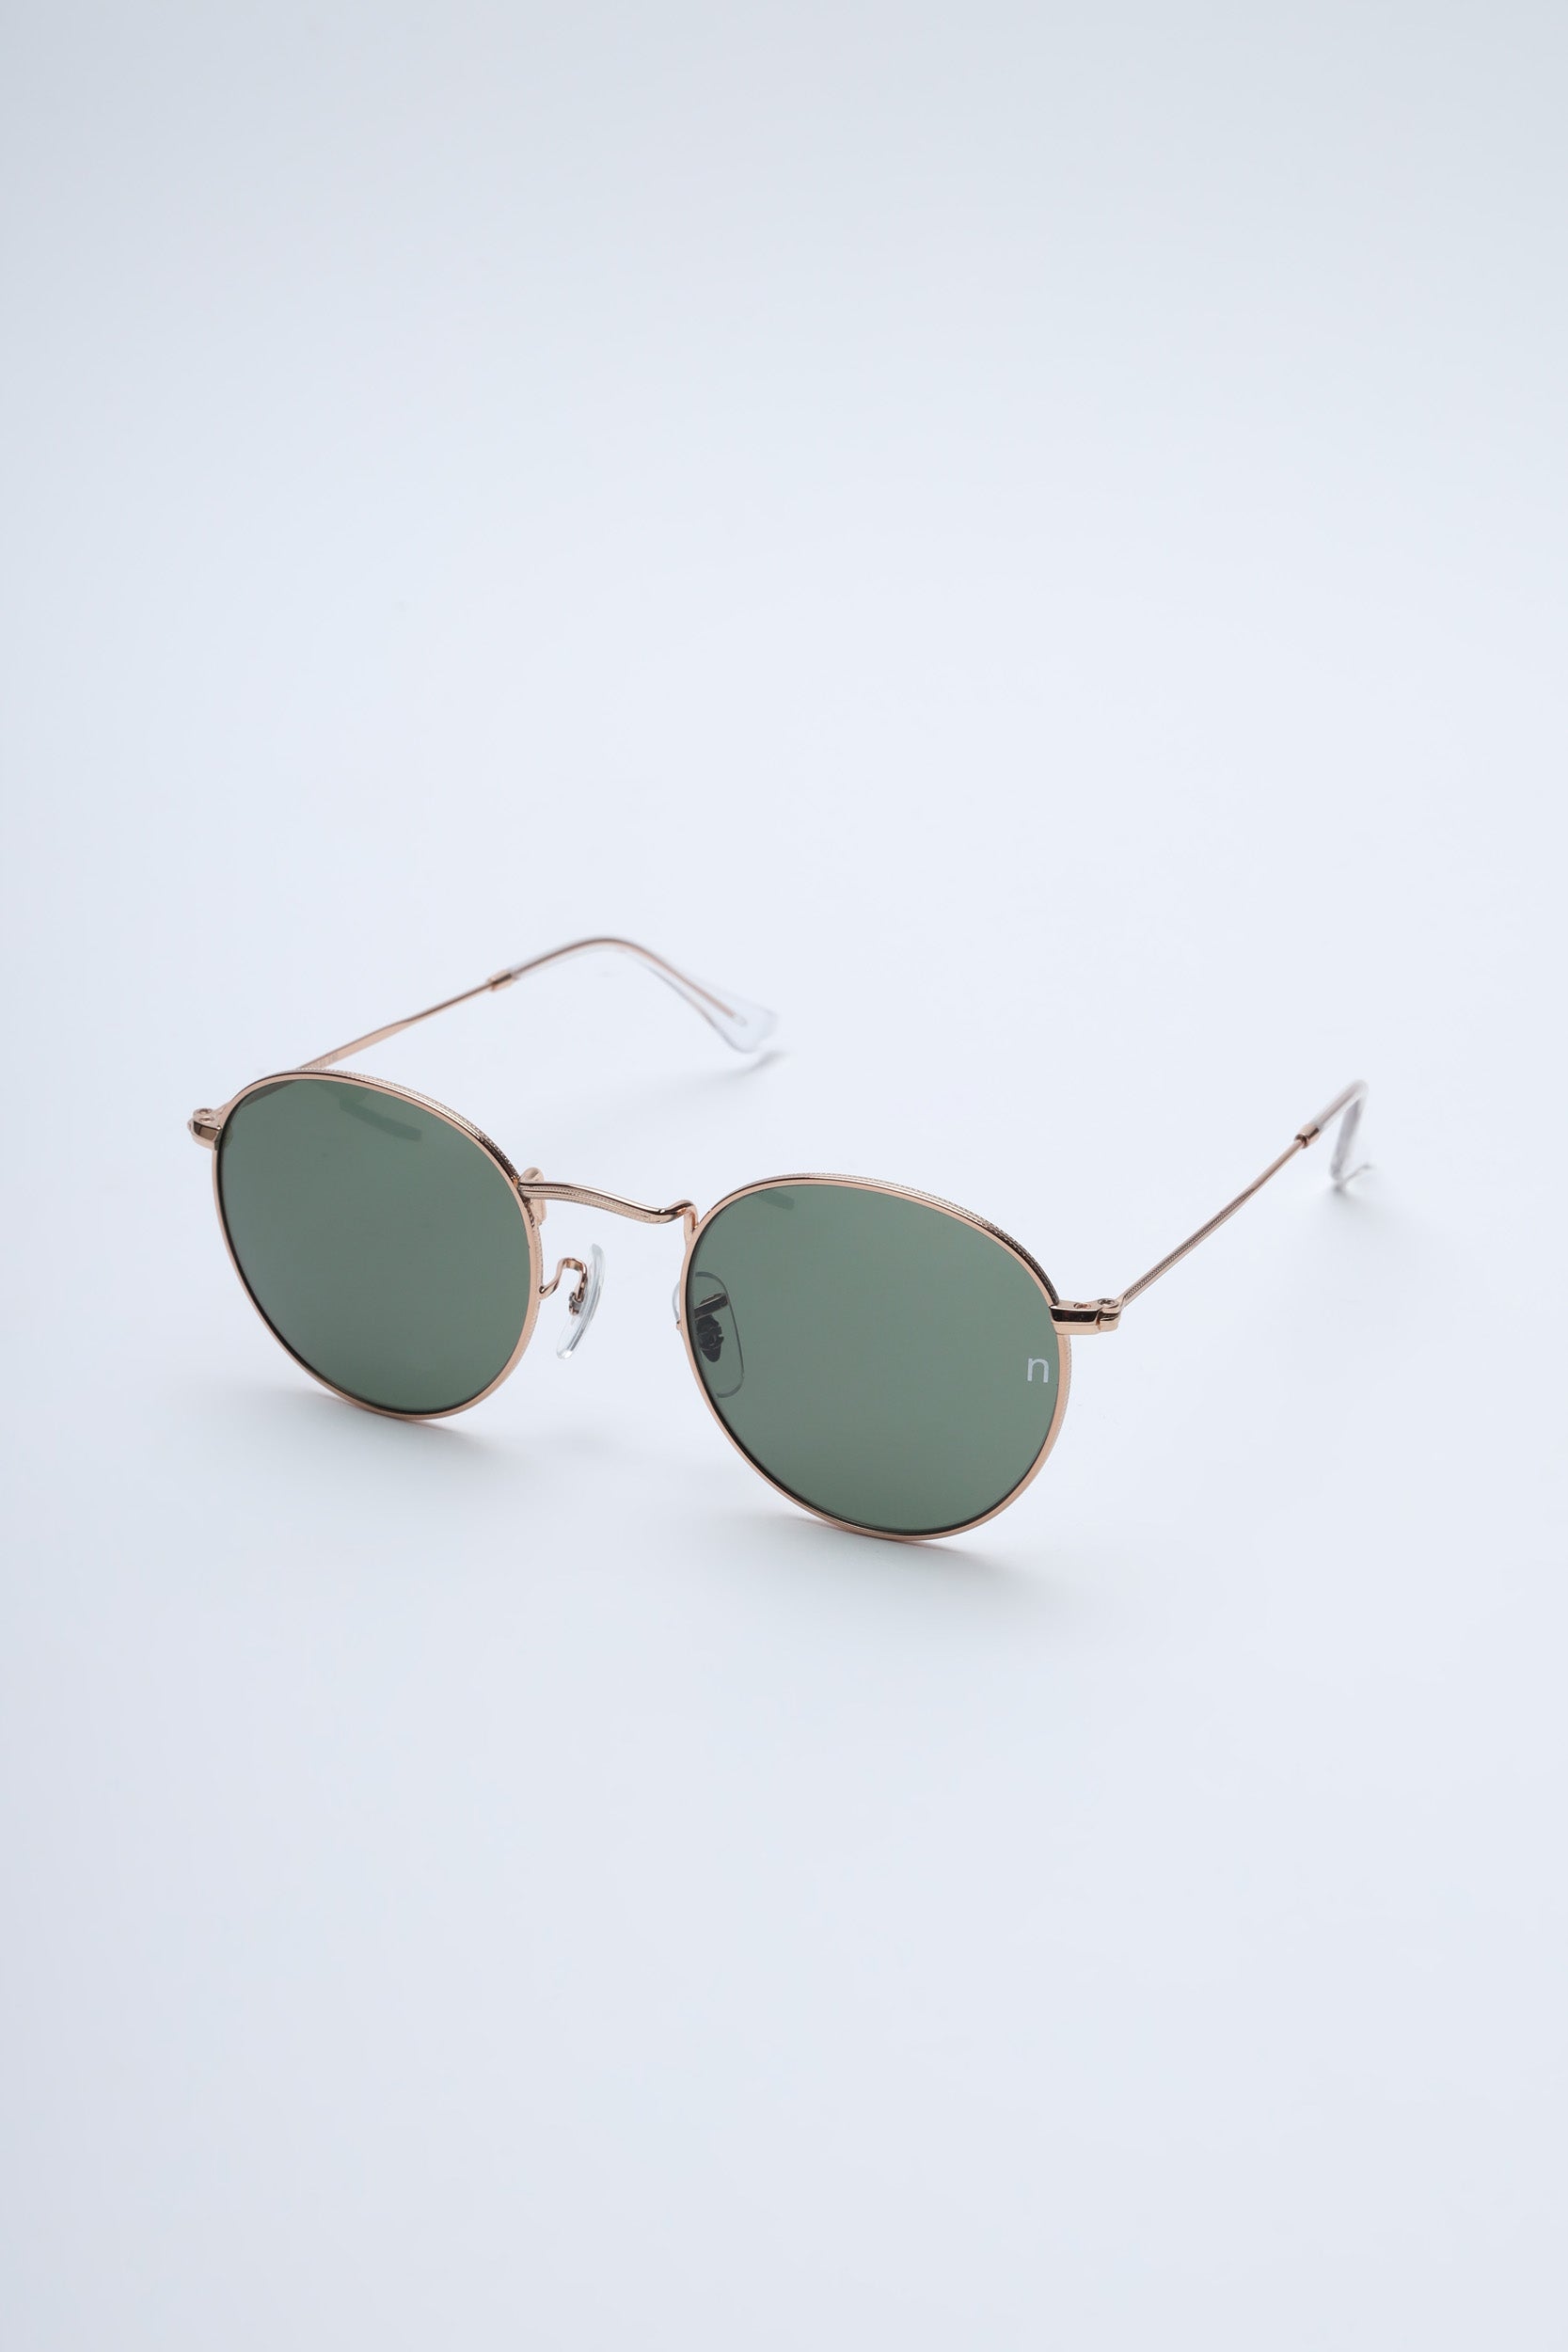 men metal frame small size sunglasses| Alibaba.com